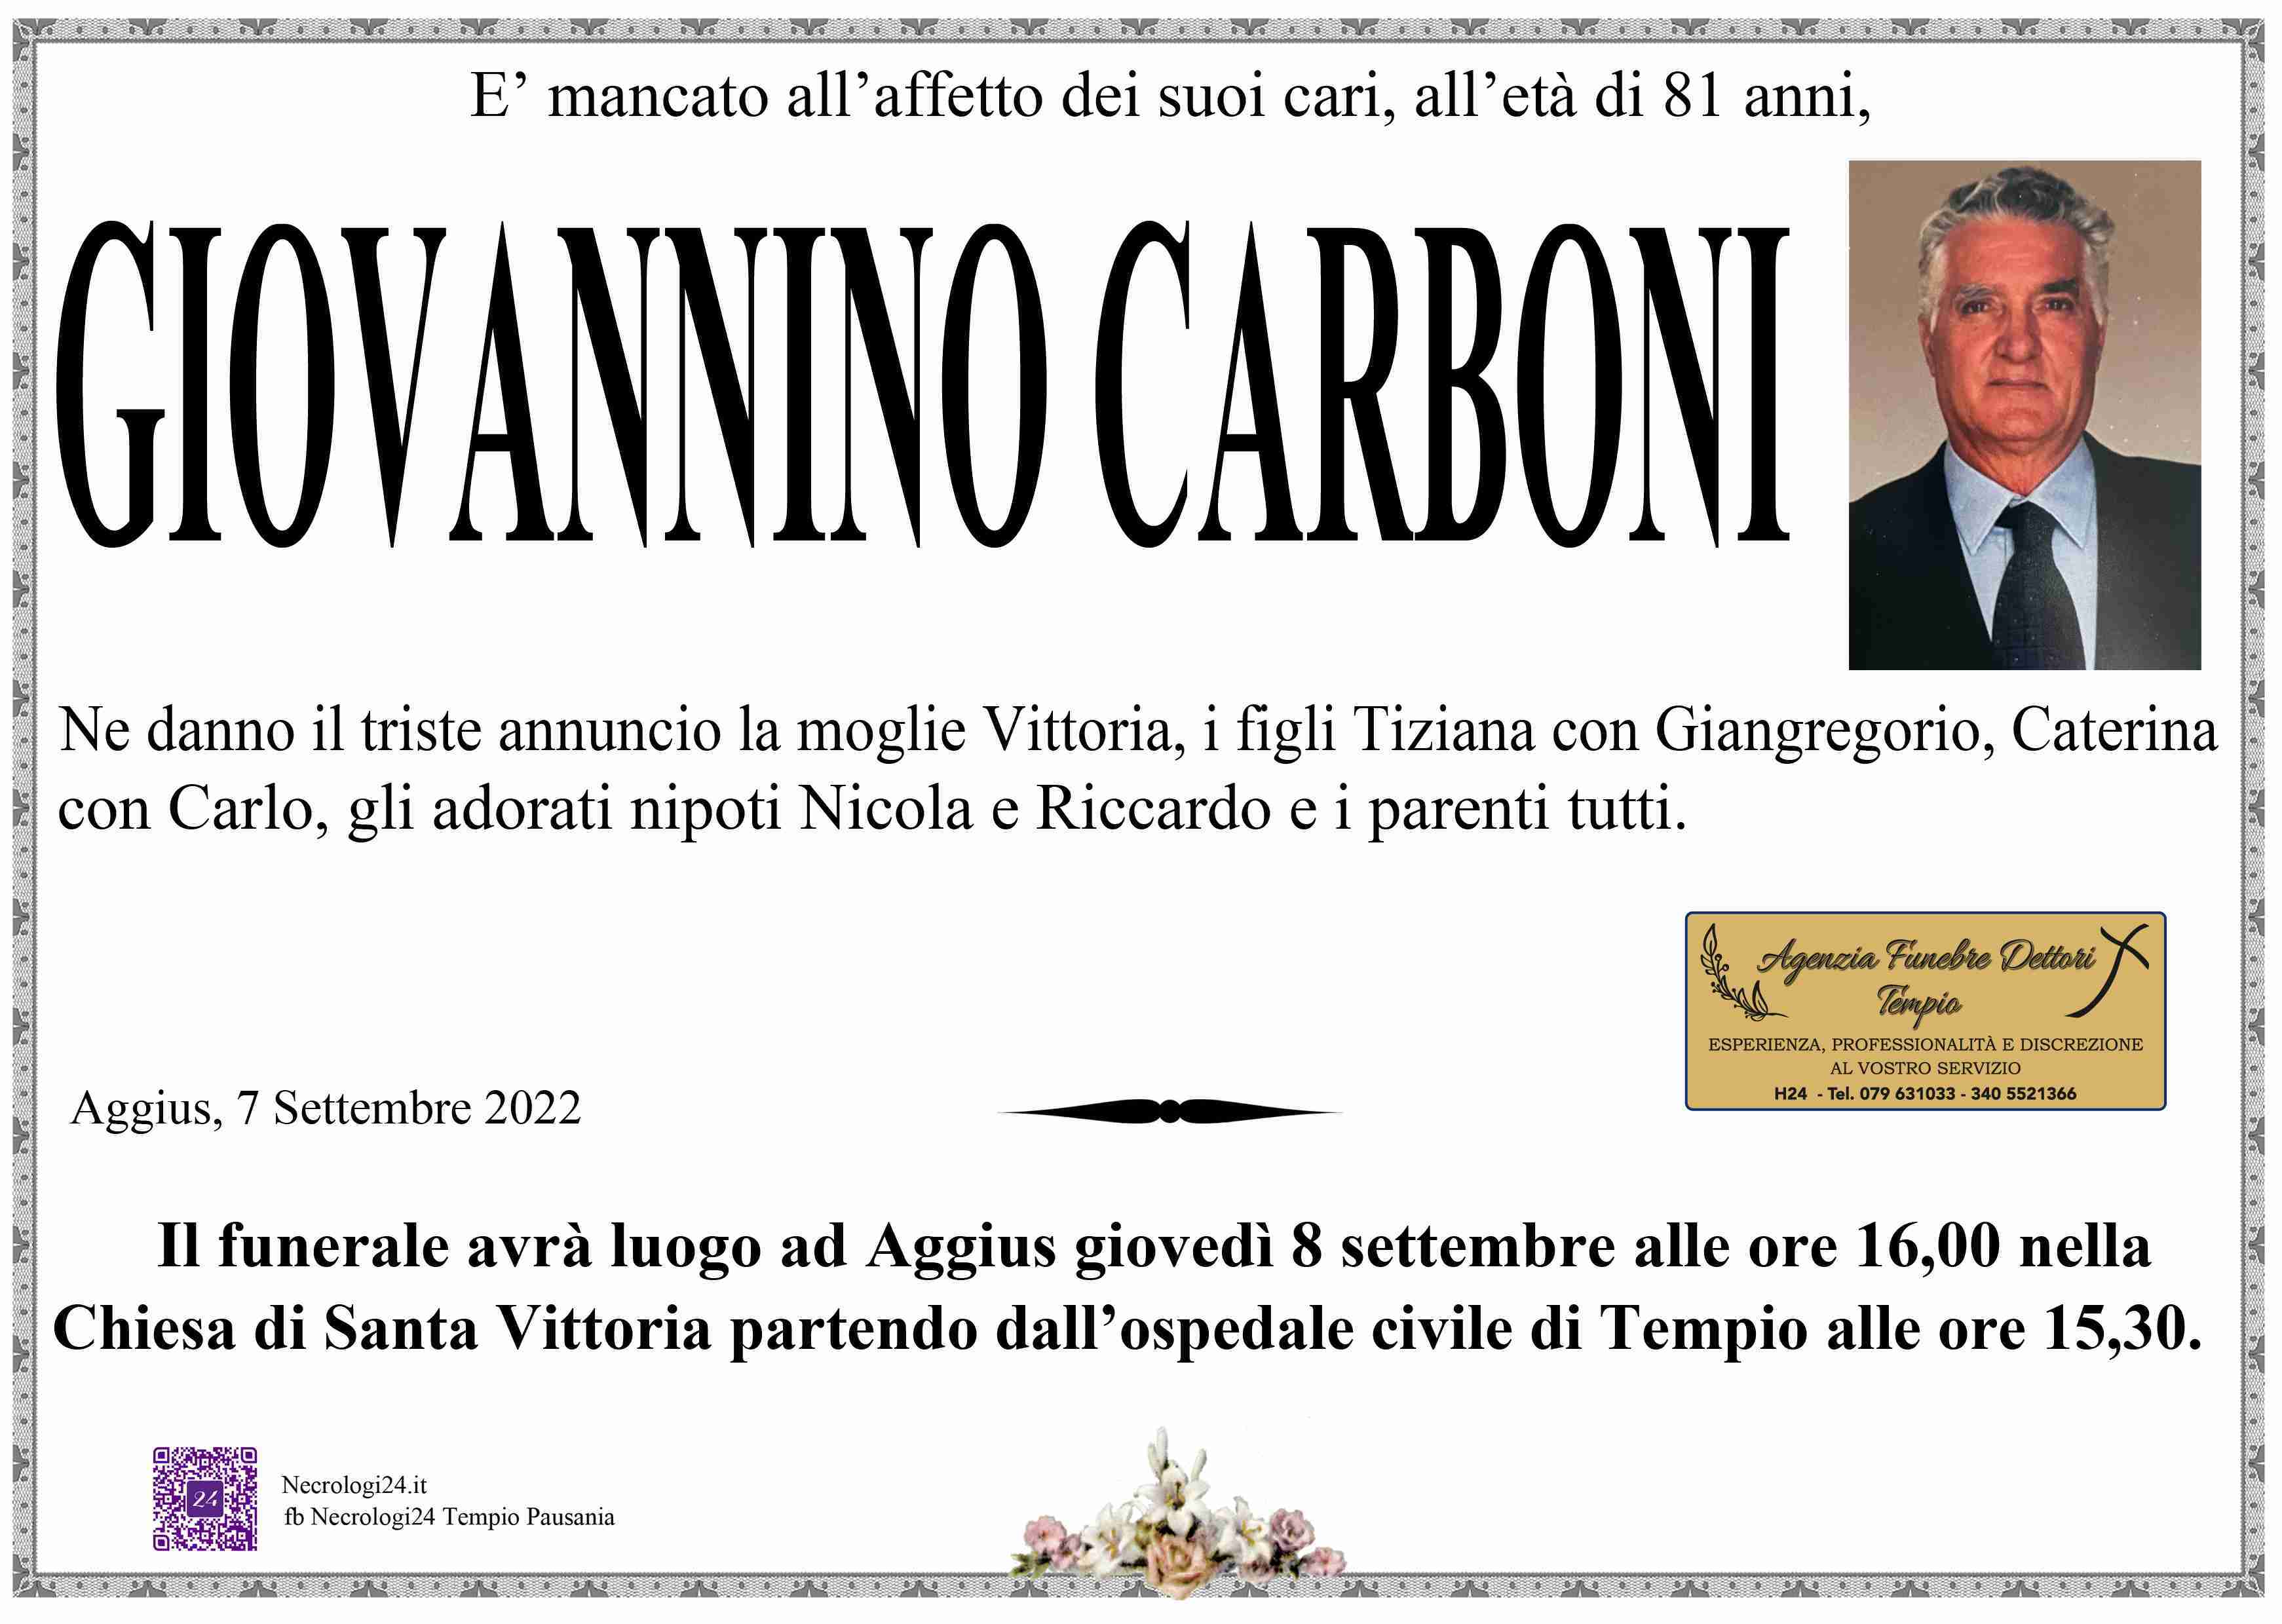 Giovannino Carboni